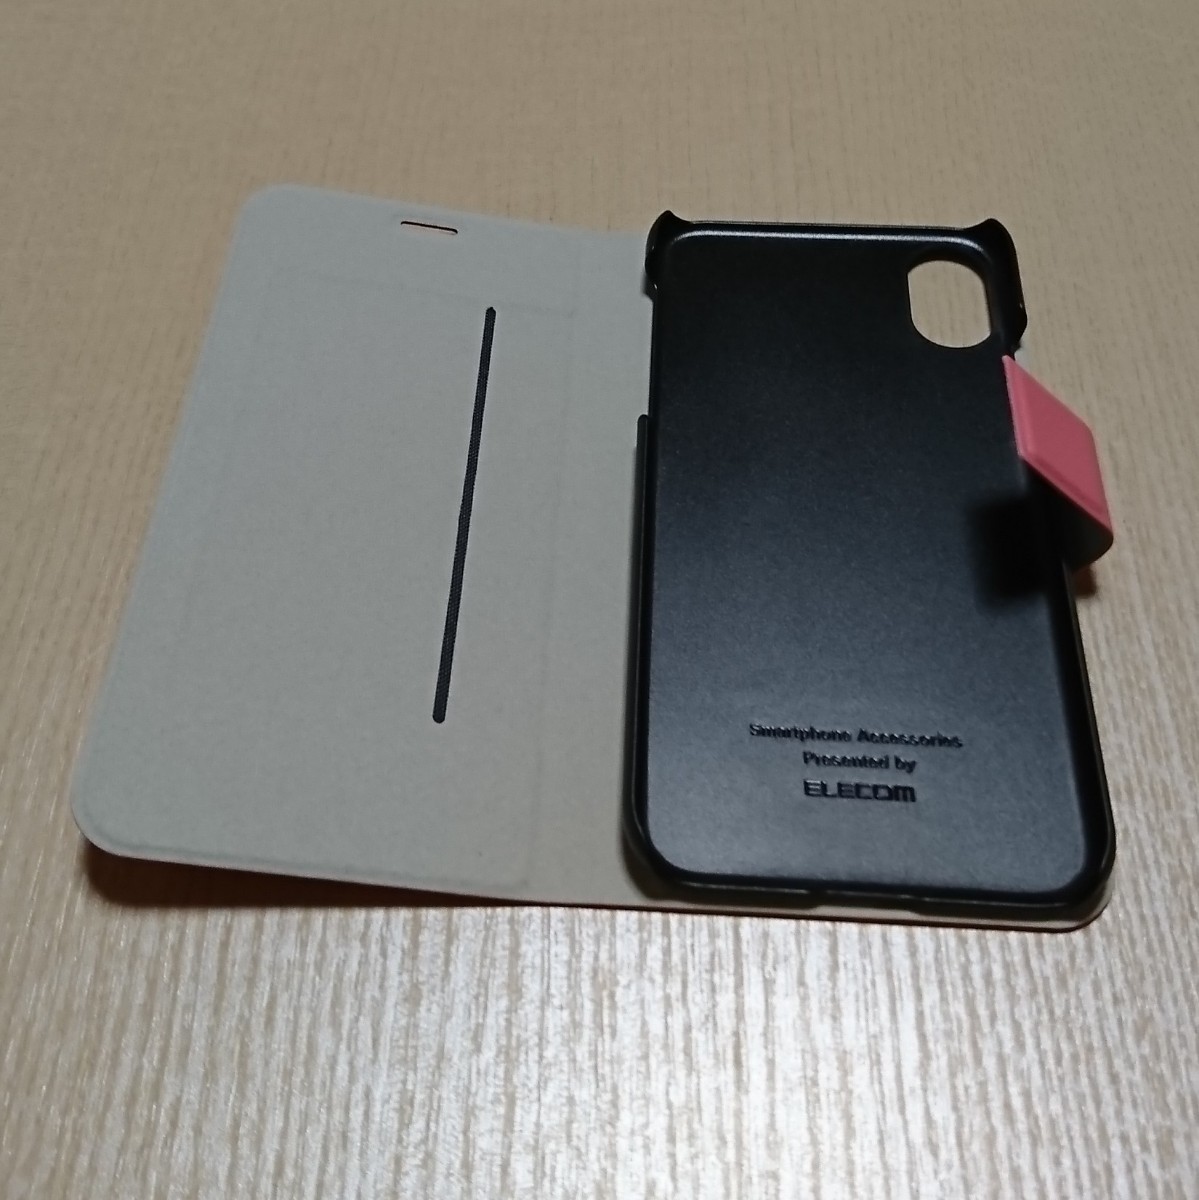 《iPhoneX/XS》ソフトレザー Ultra Slim 手帳型ケース ピンク